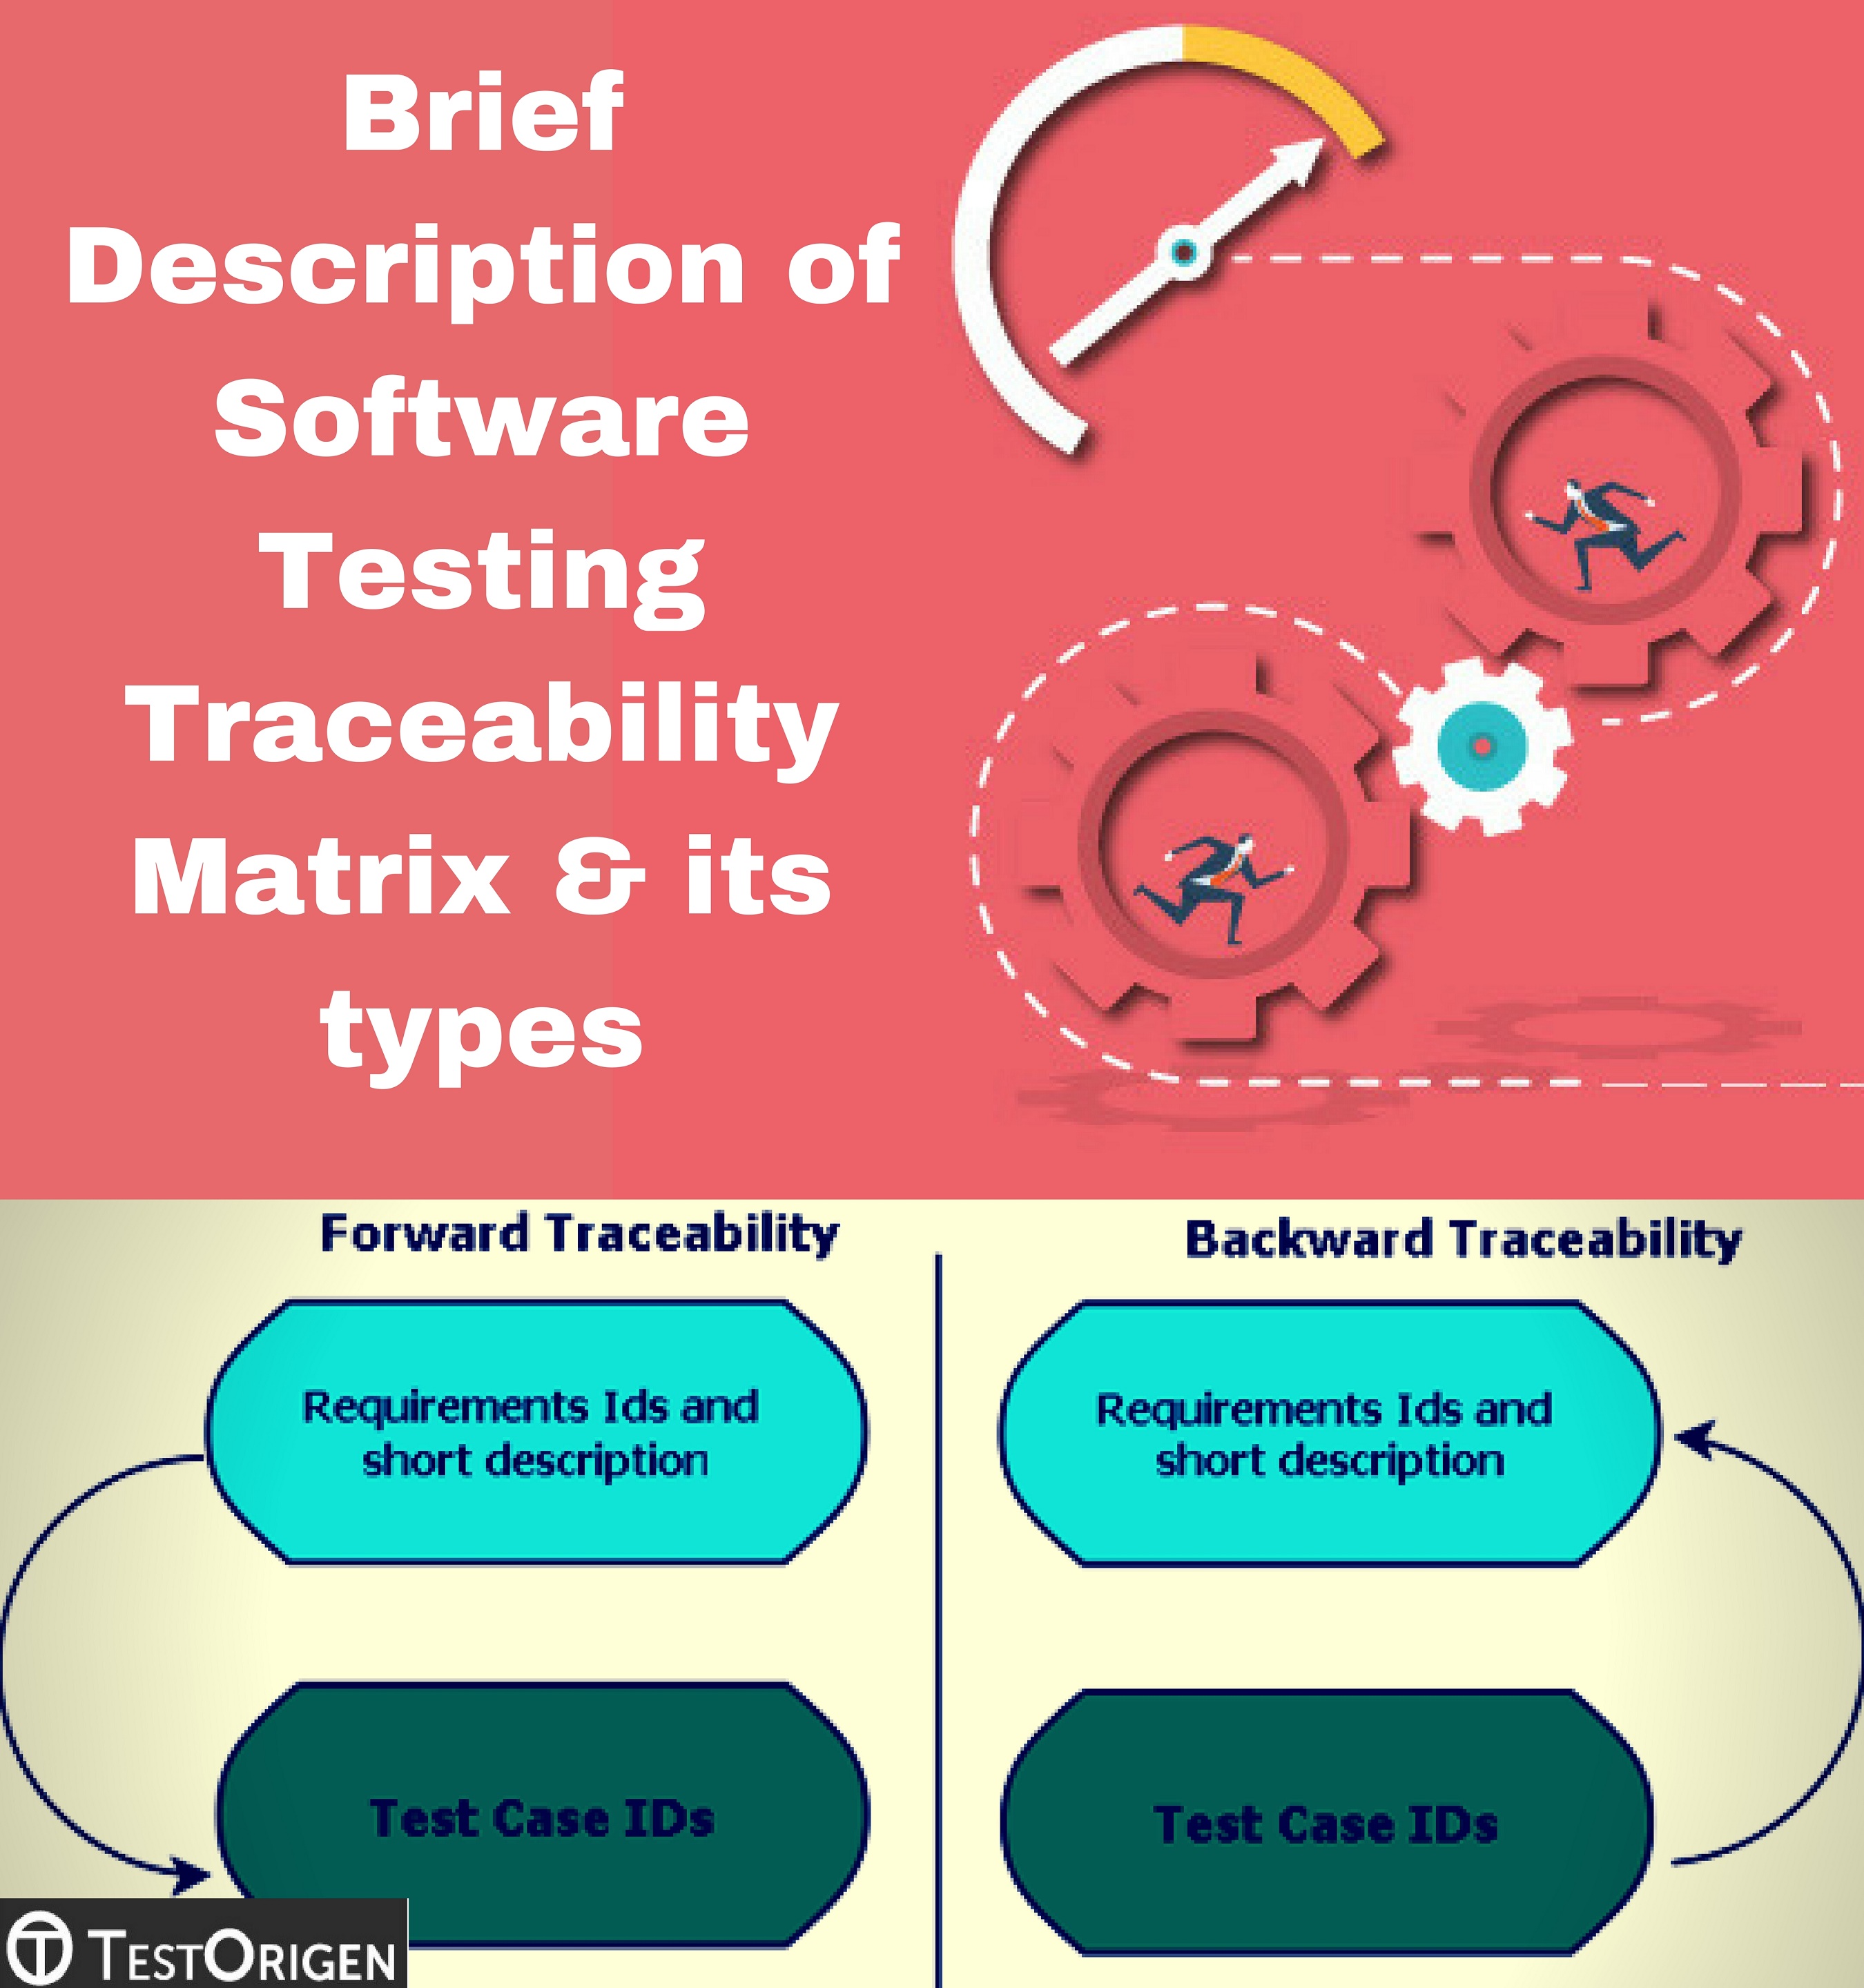 Brief Description of Software Testing Traceability Matrix & its types